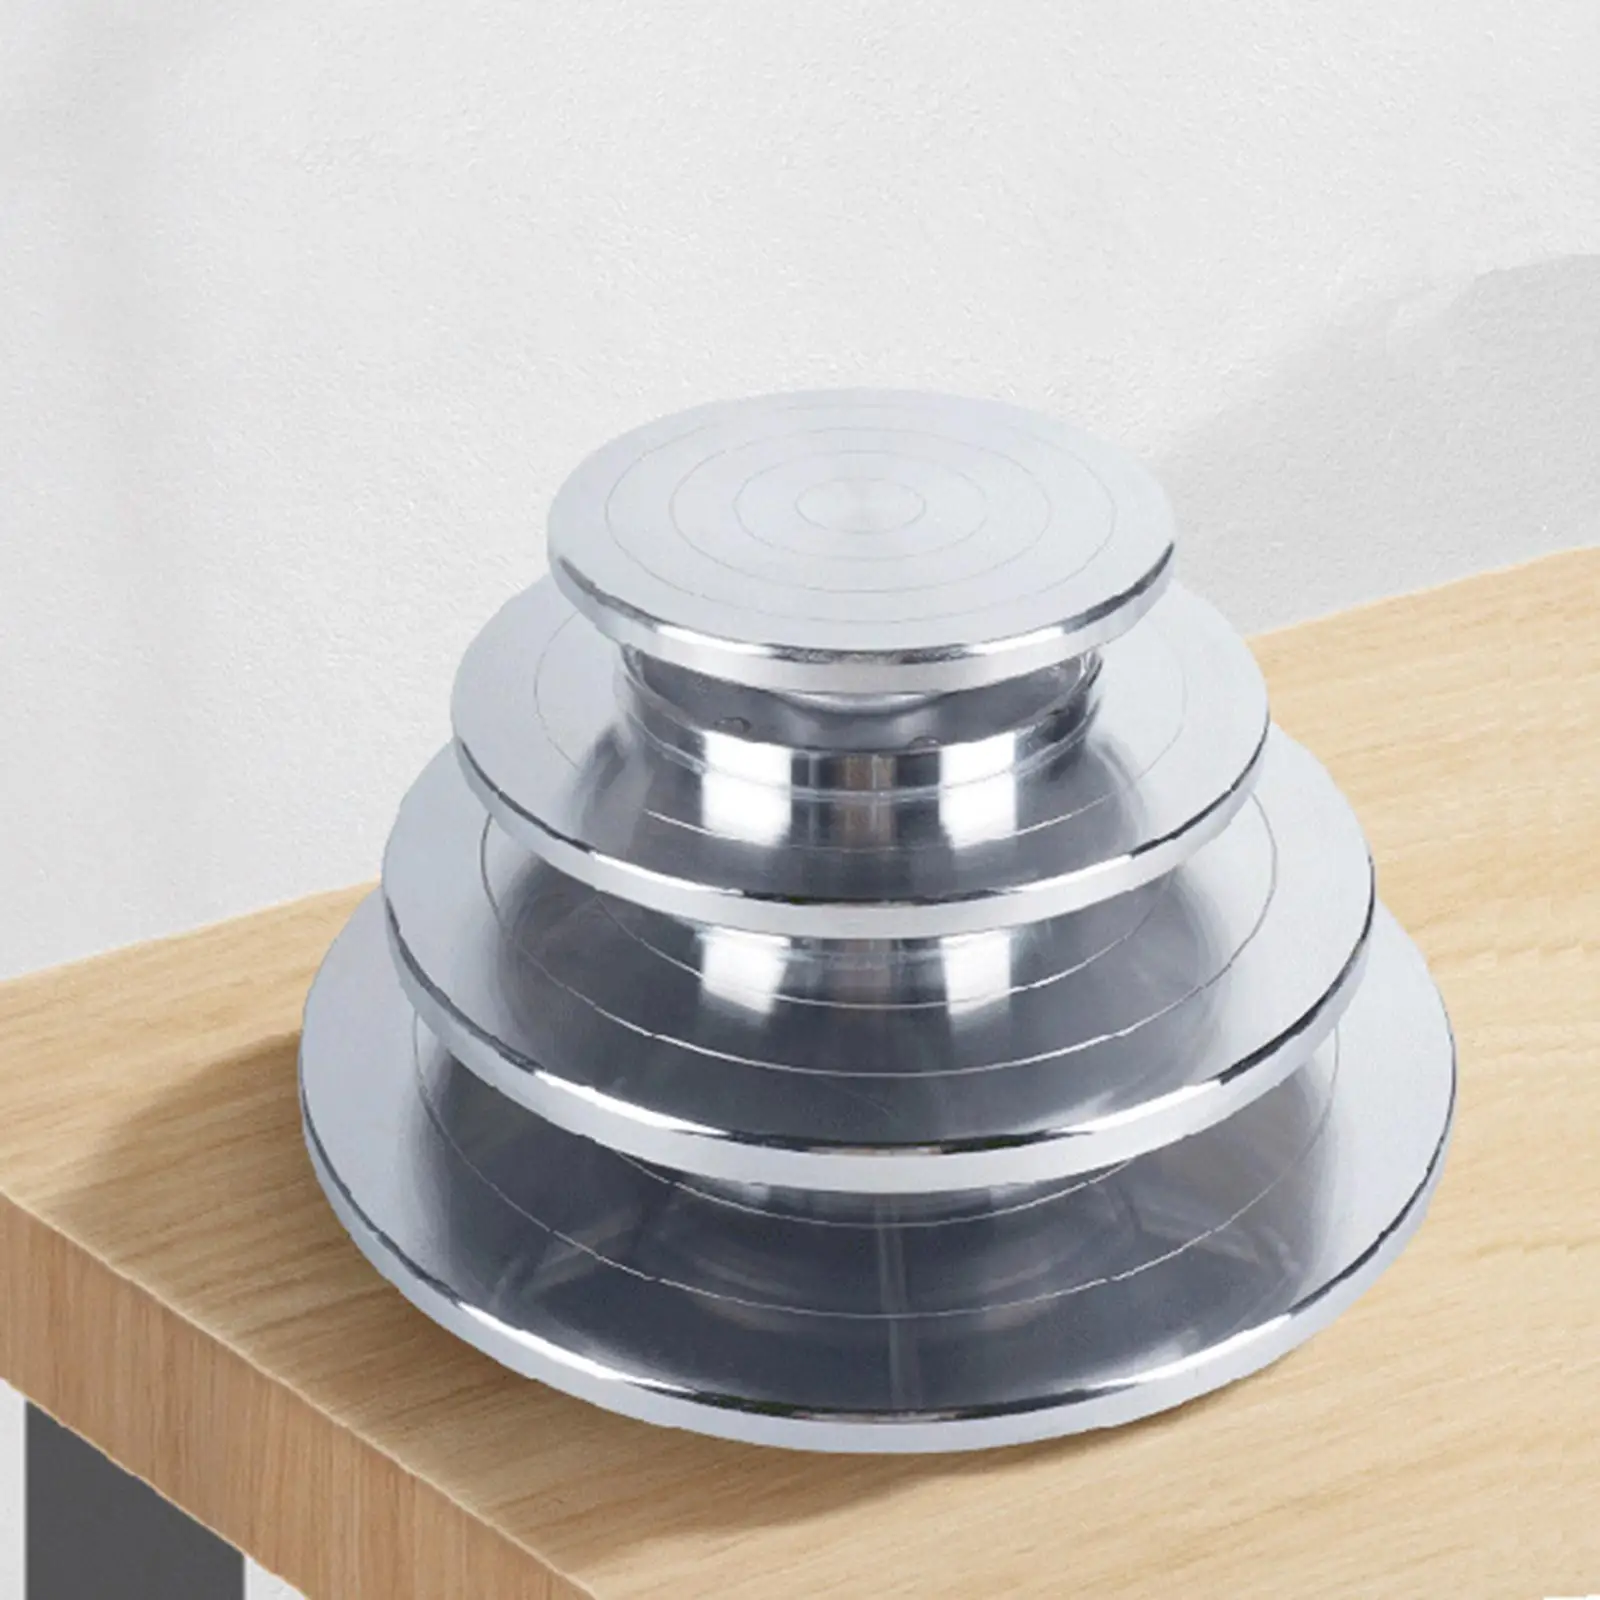 Durable Sculpting Wheel Turntable Pottery Platform Cake Decorating for Model